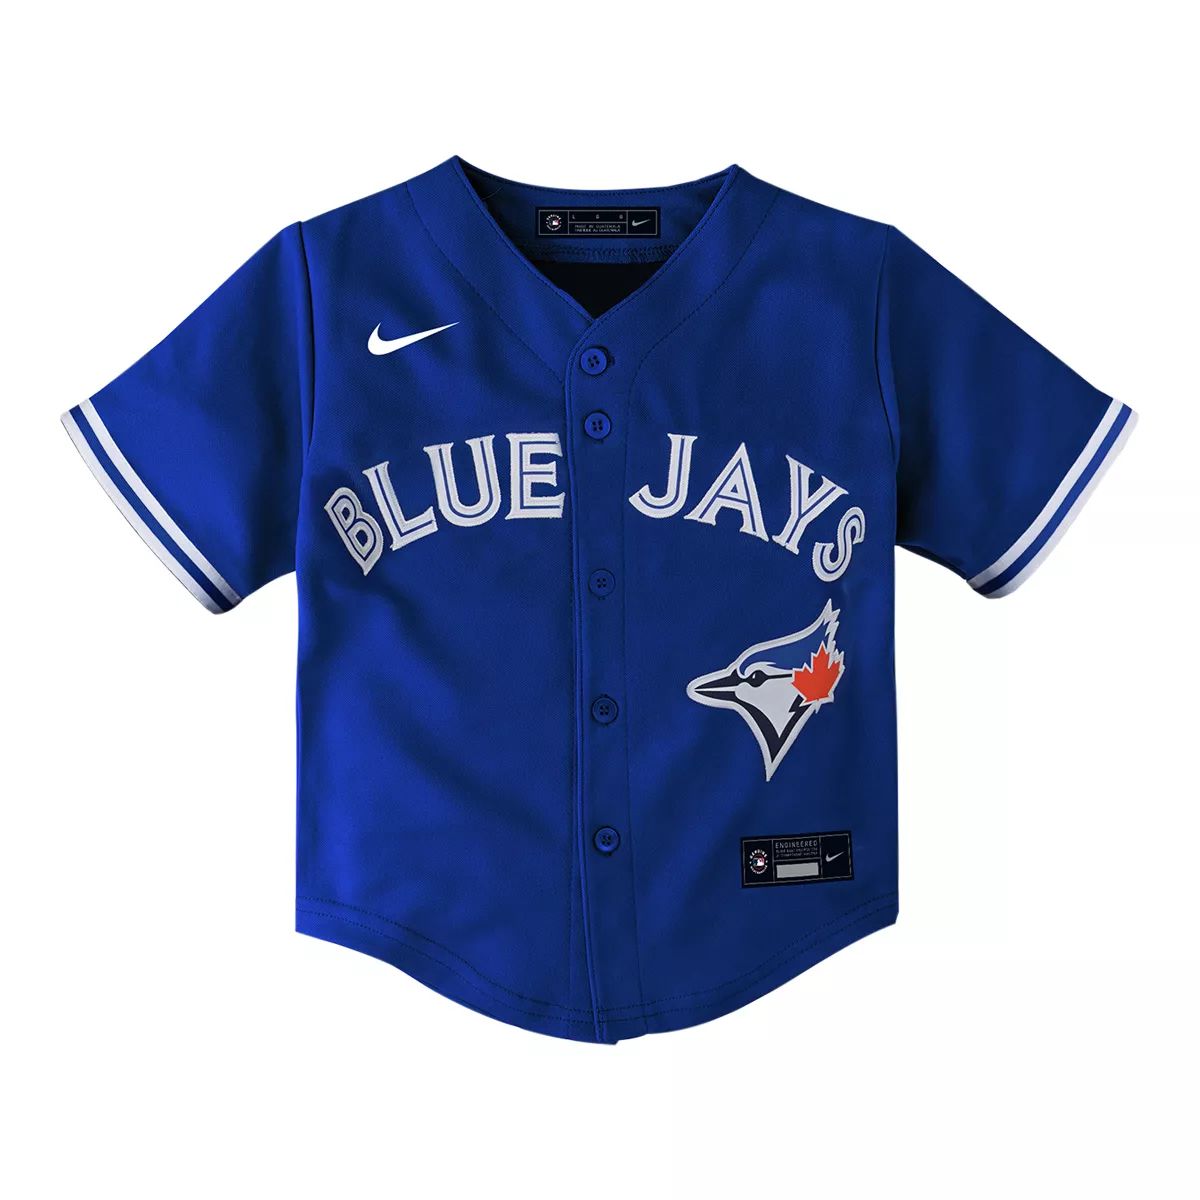 NEW - Mens Stitched Nike MLB Jersey - Bo Bichette - Blue Jays - M